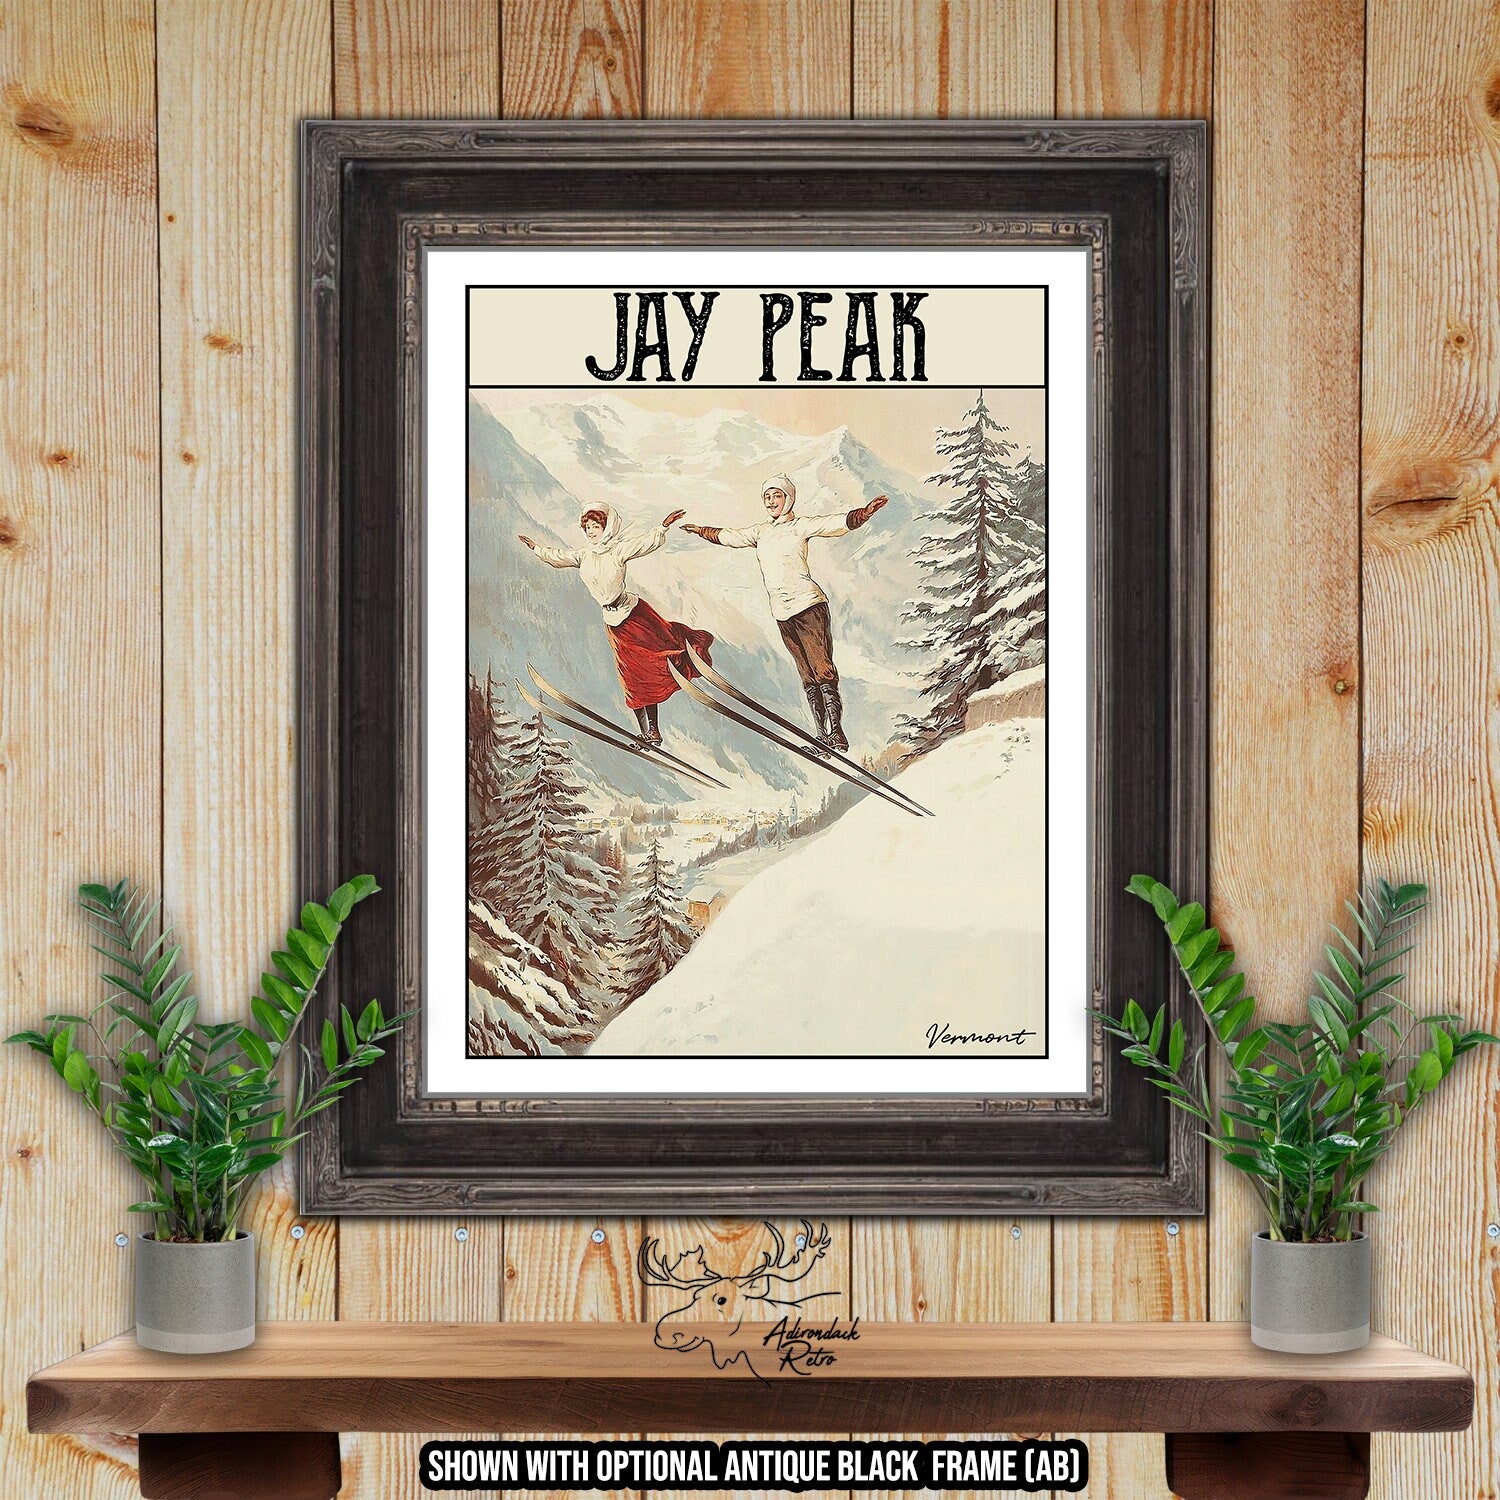 Jay Peak Vermont Retro Ski Resort Art Print at Adirondack Retro